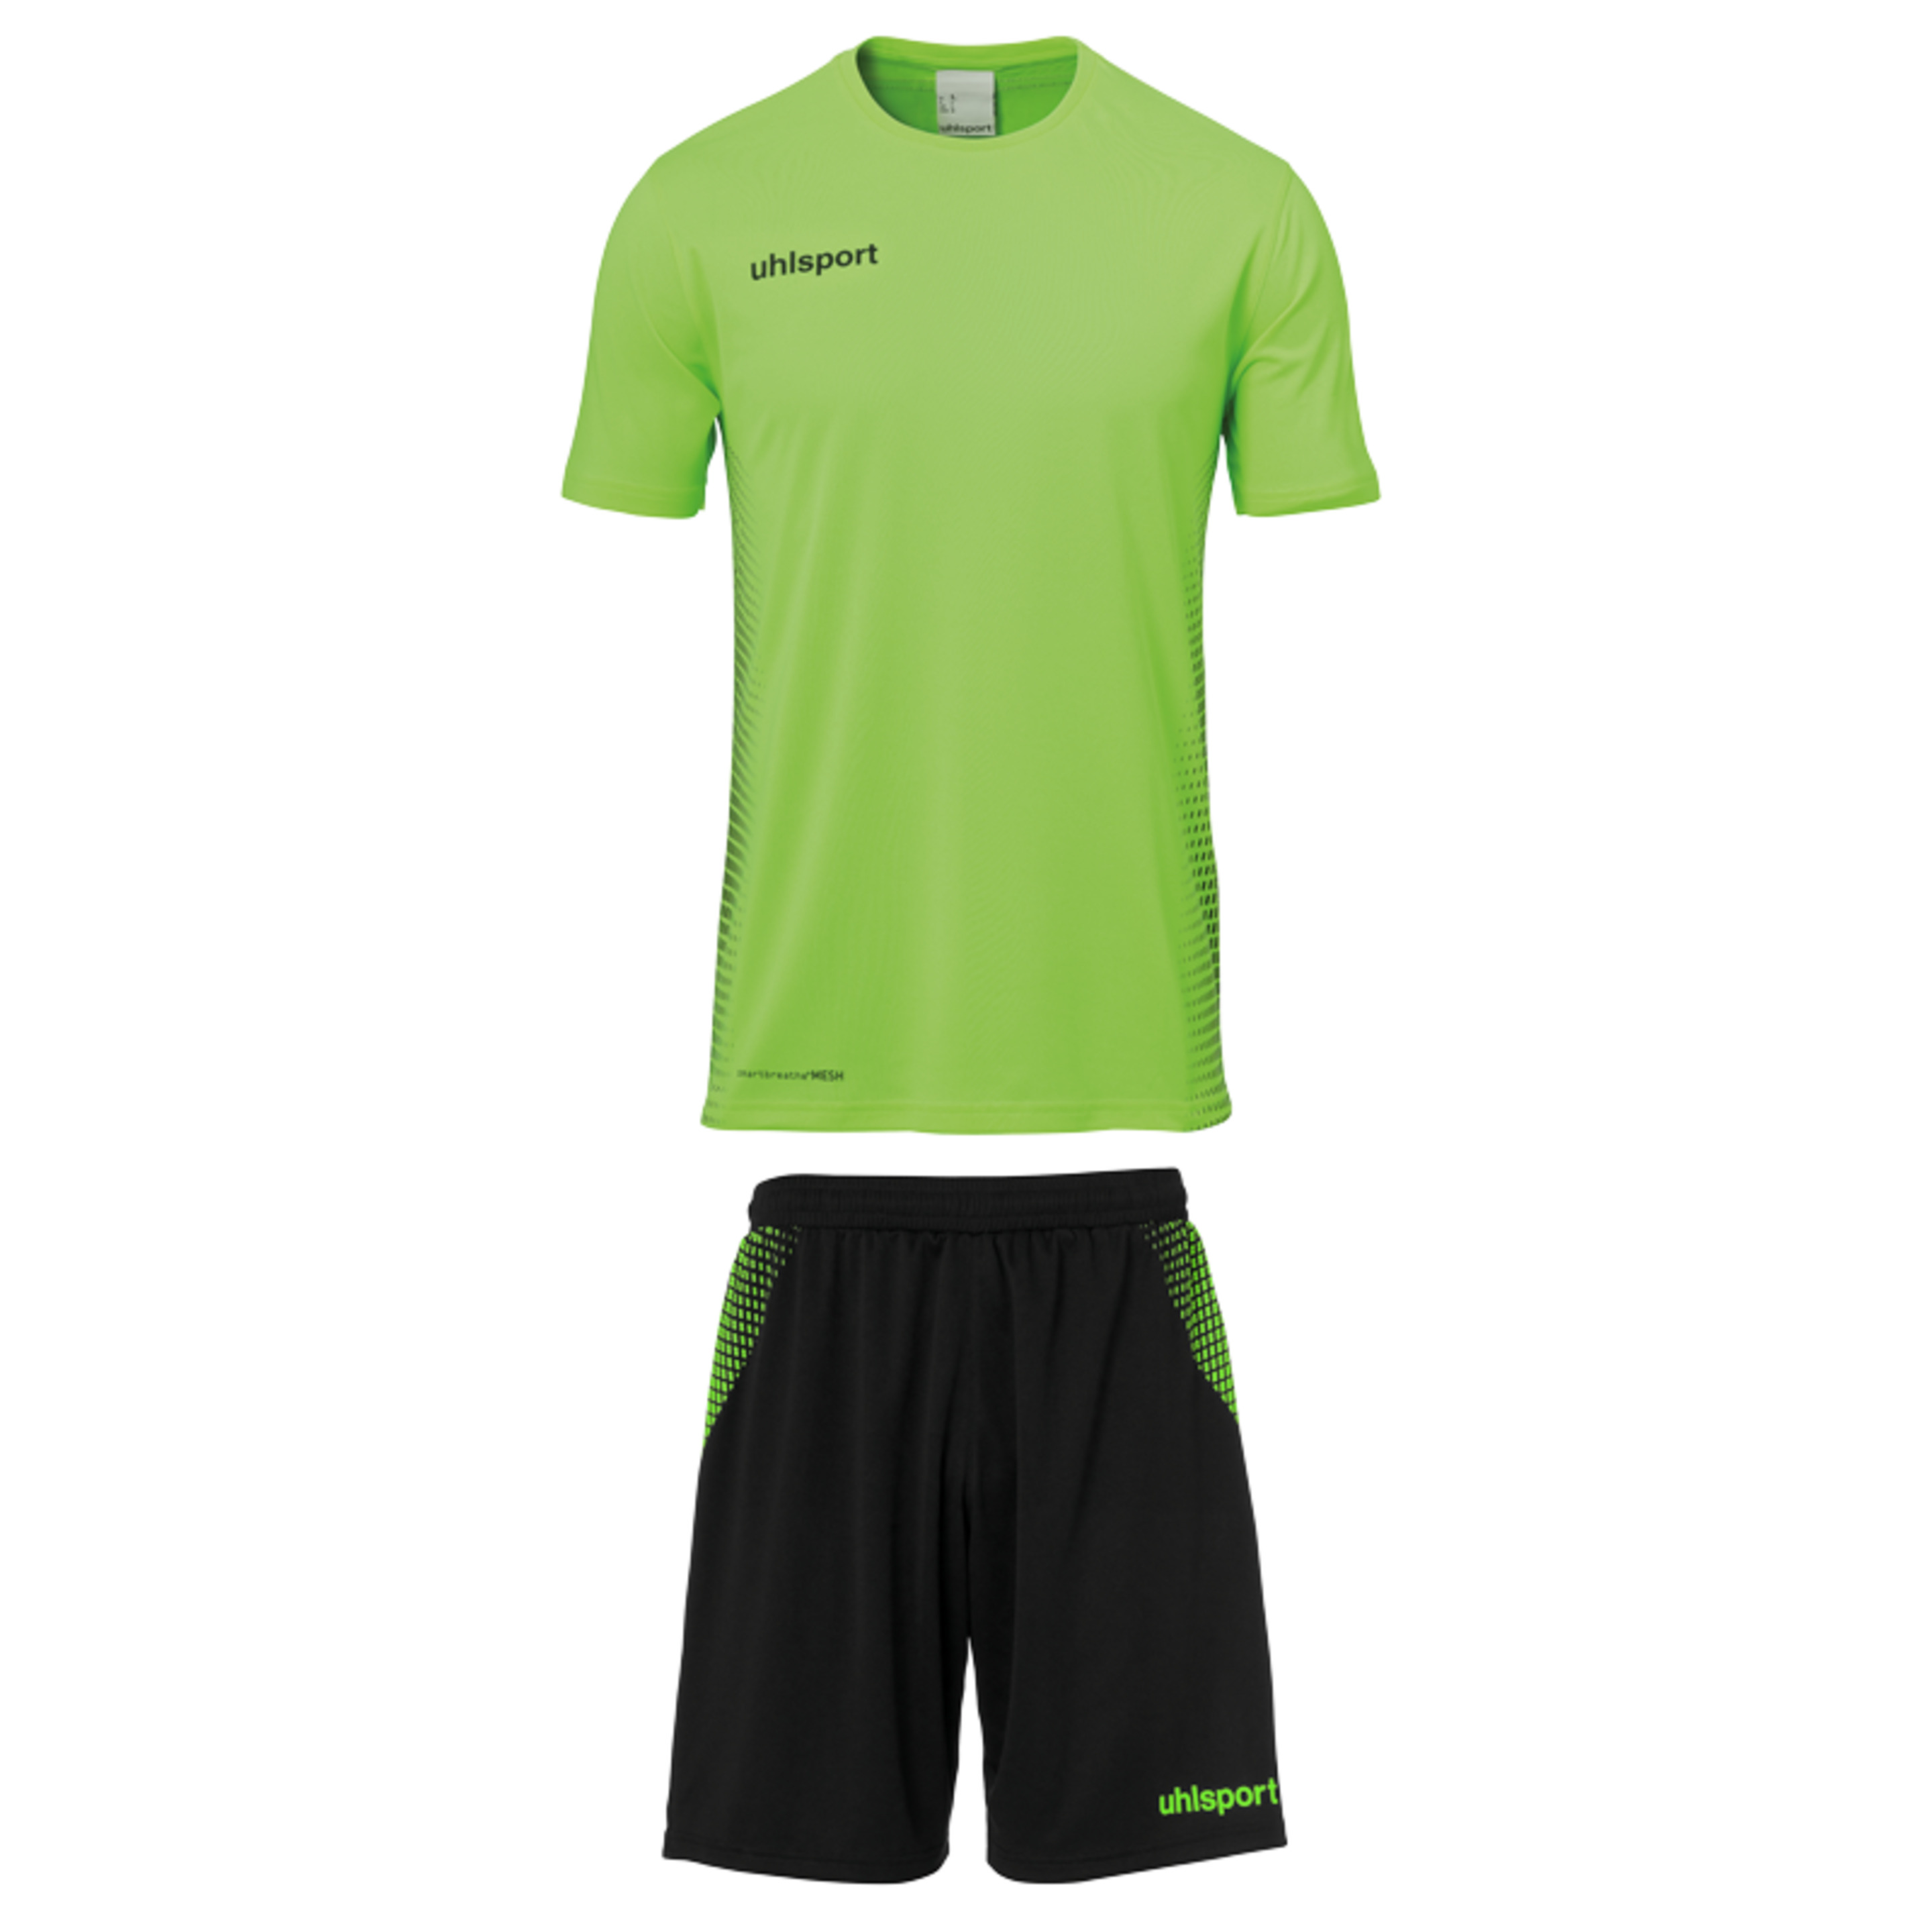 Camiseta Y Pantalón Uhlsport Score Kit Ss - Negro/Verde  MKP